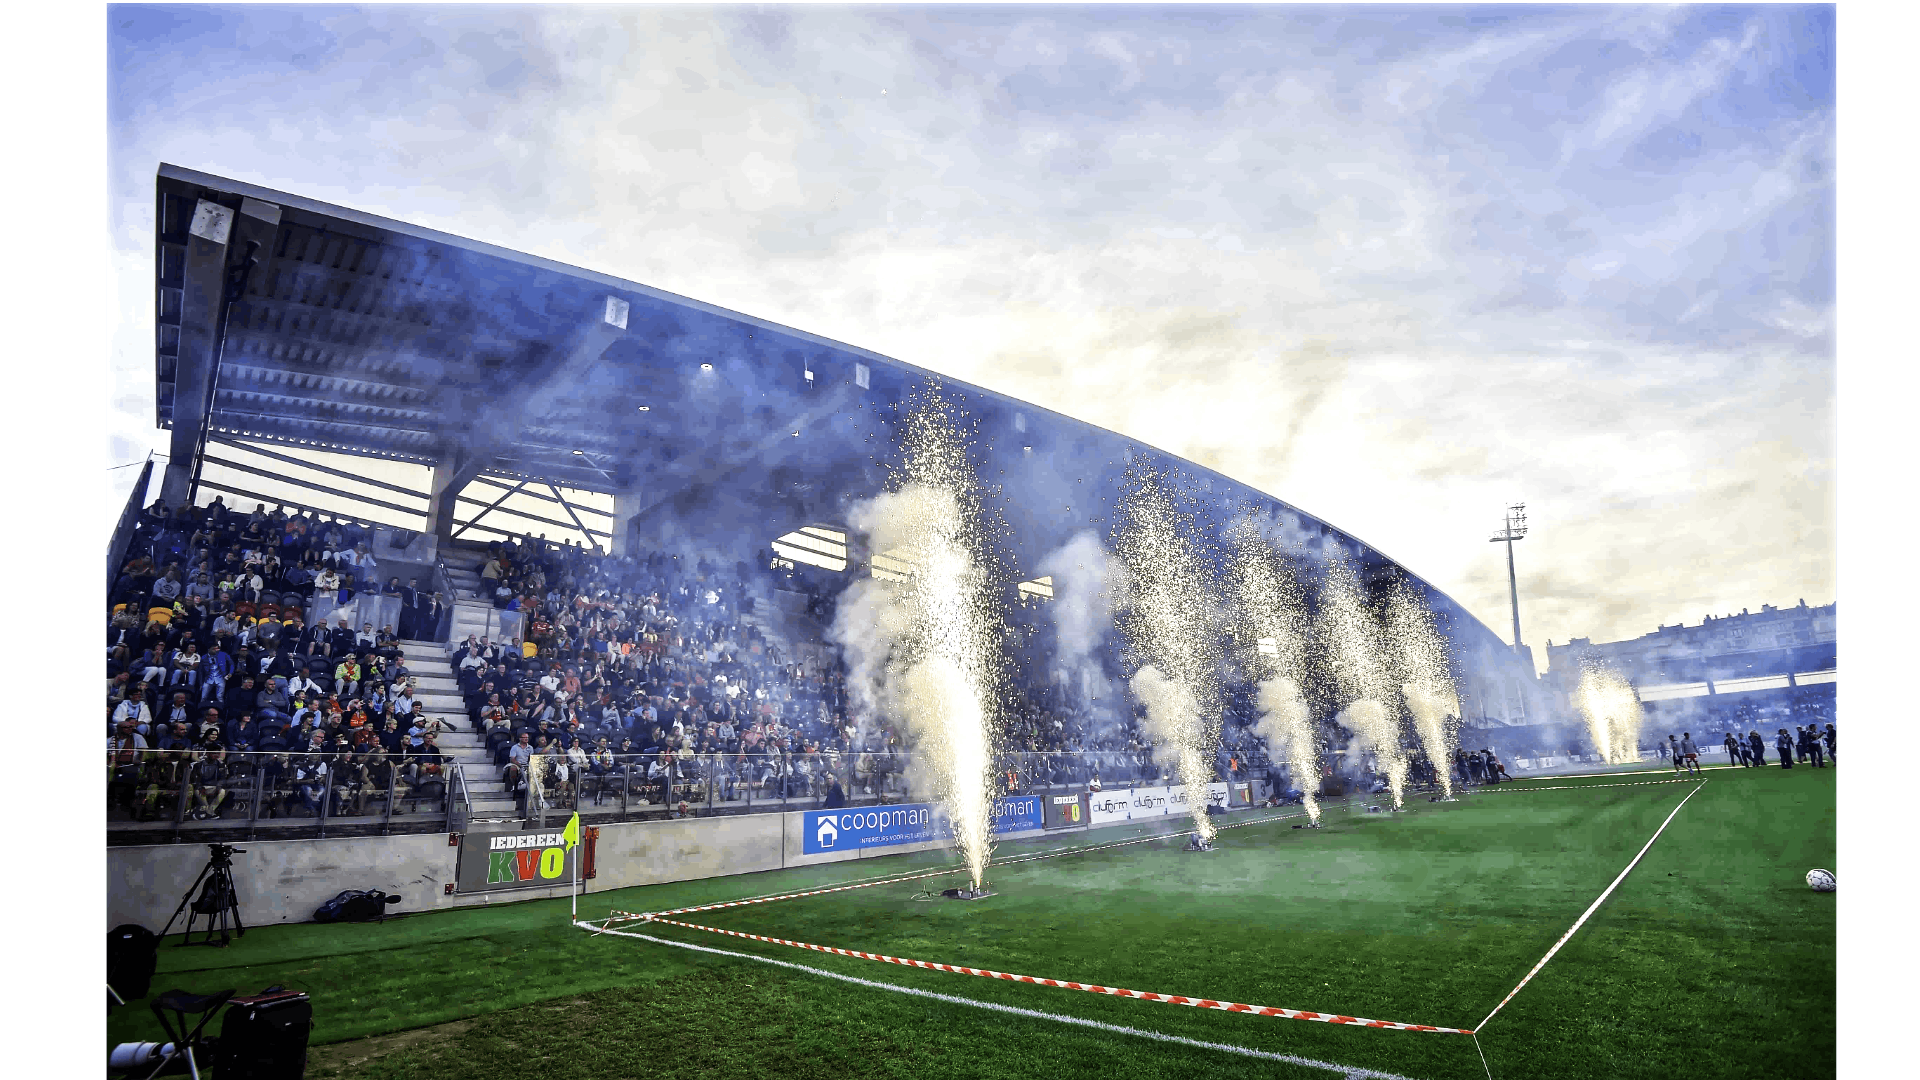 Anderlecht vs OH Leuven Tickets & Hospitality